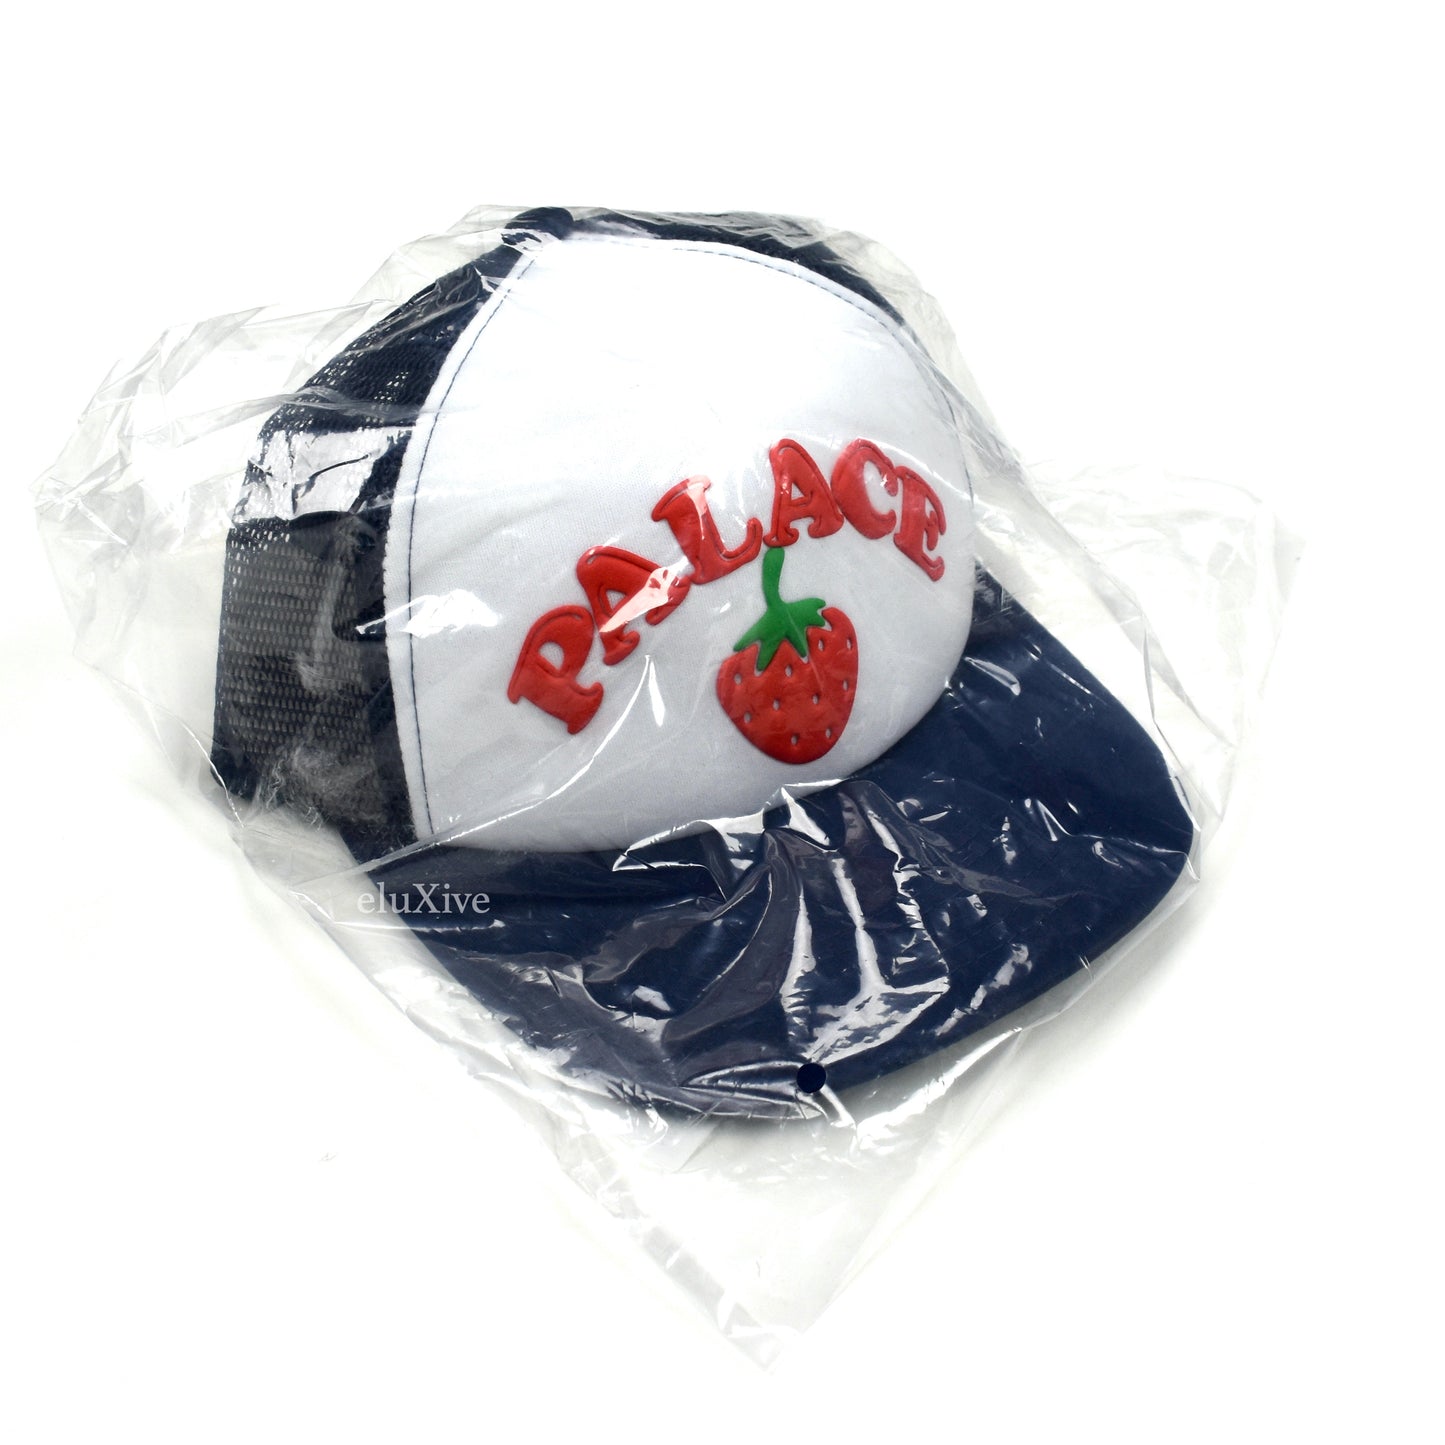 Palace - Strawberry Logo Trucker Hat (Navy)